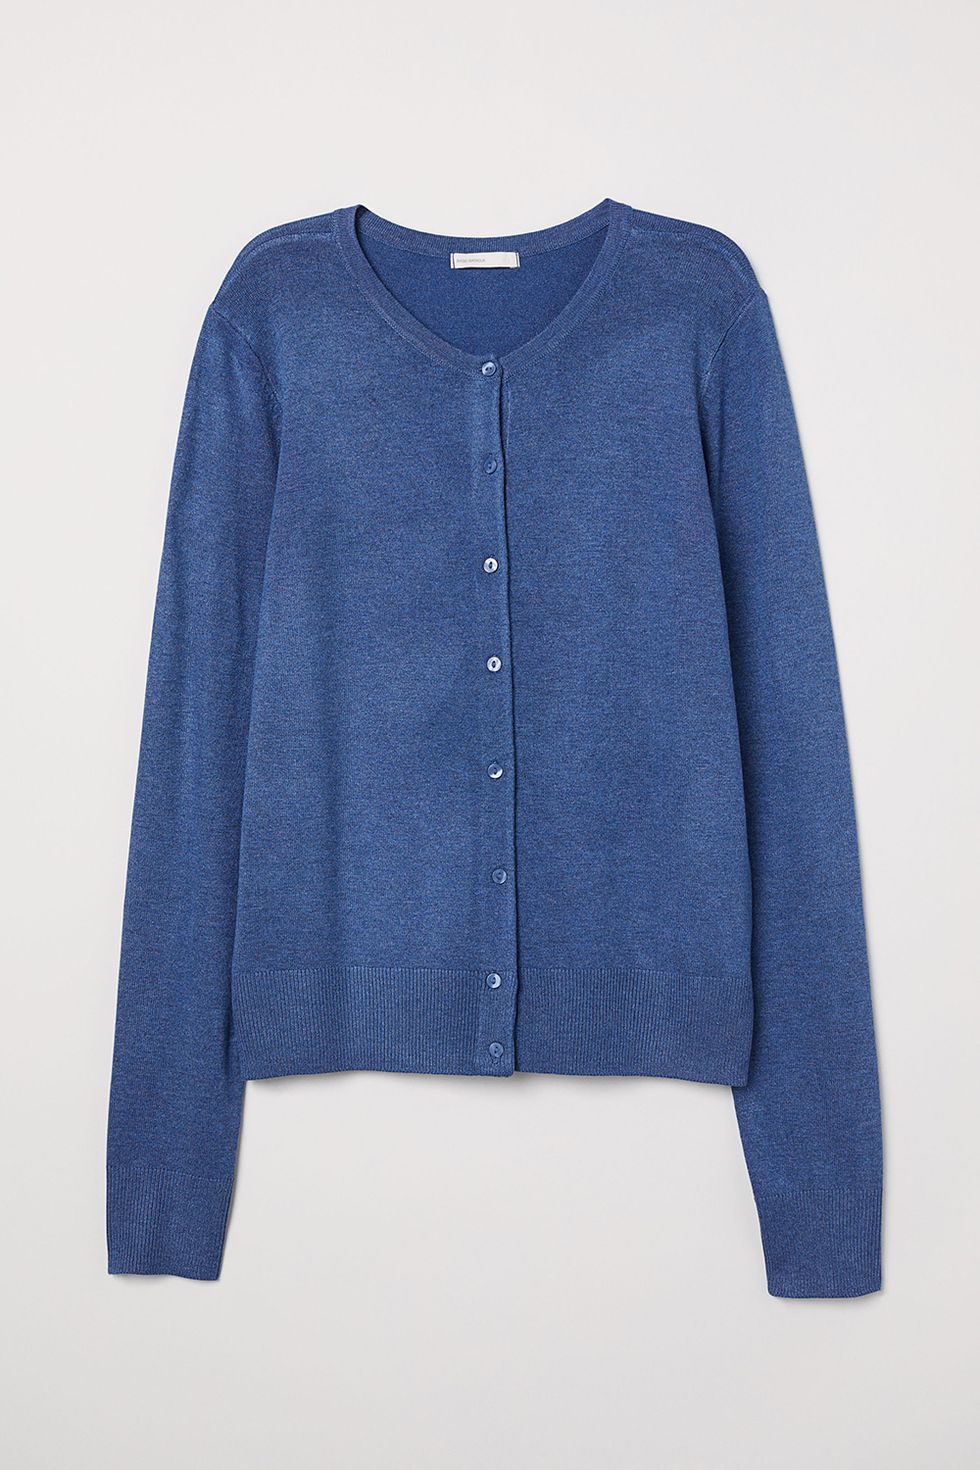 Clothing, Outerwear, Blue, Sleeve, Sweater, Cardigan, Cobalt blue, Electric blue, Top, Woolen, 